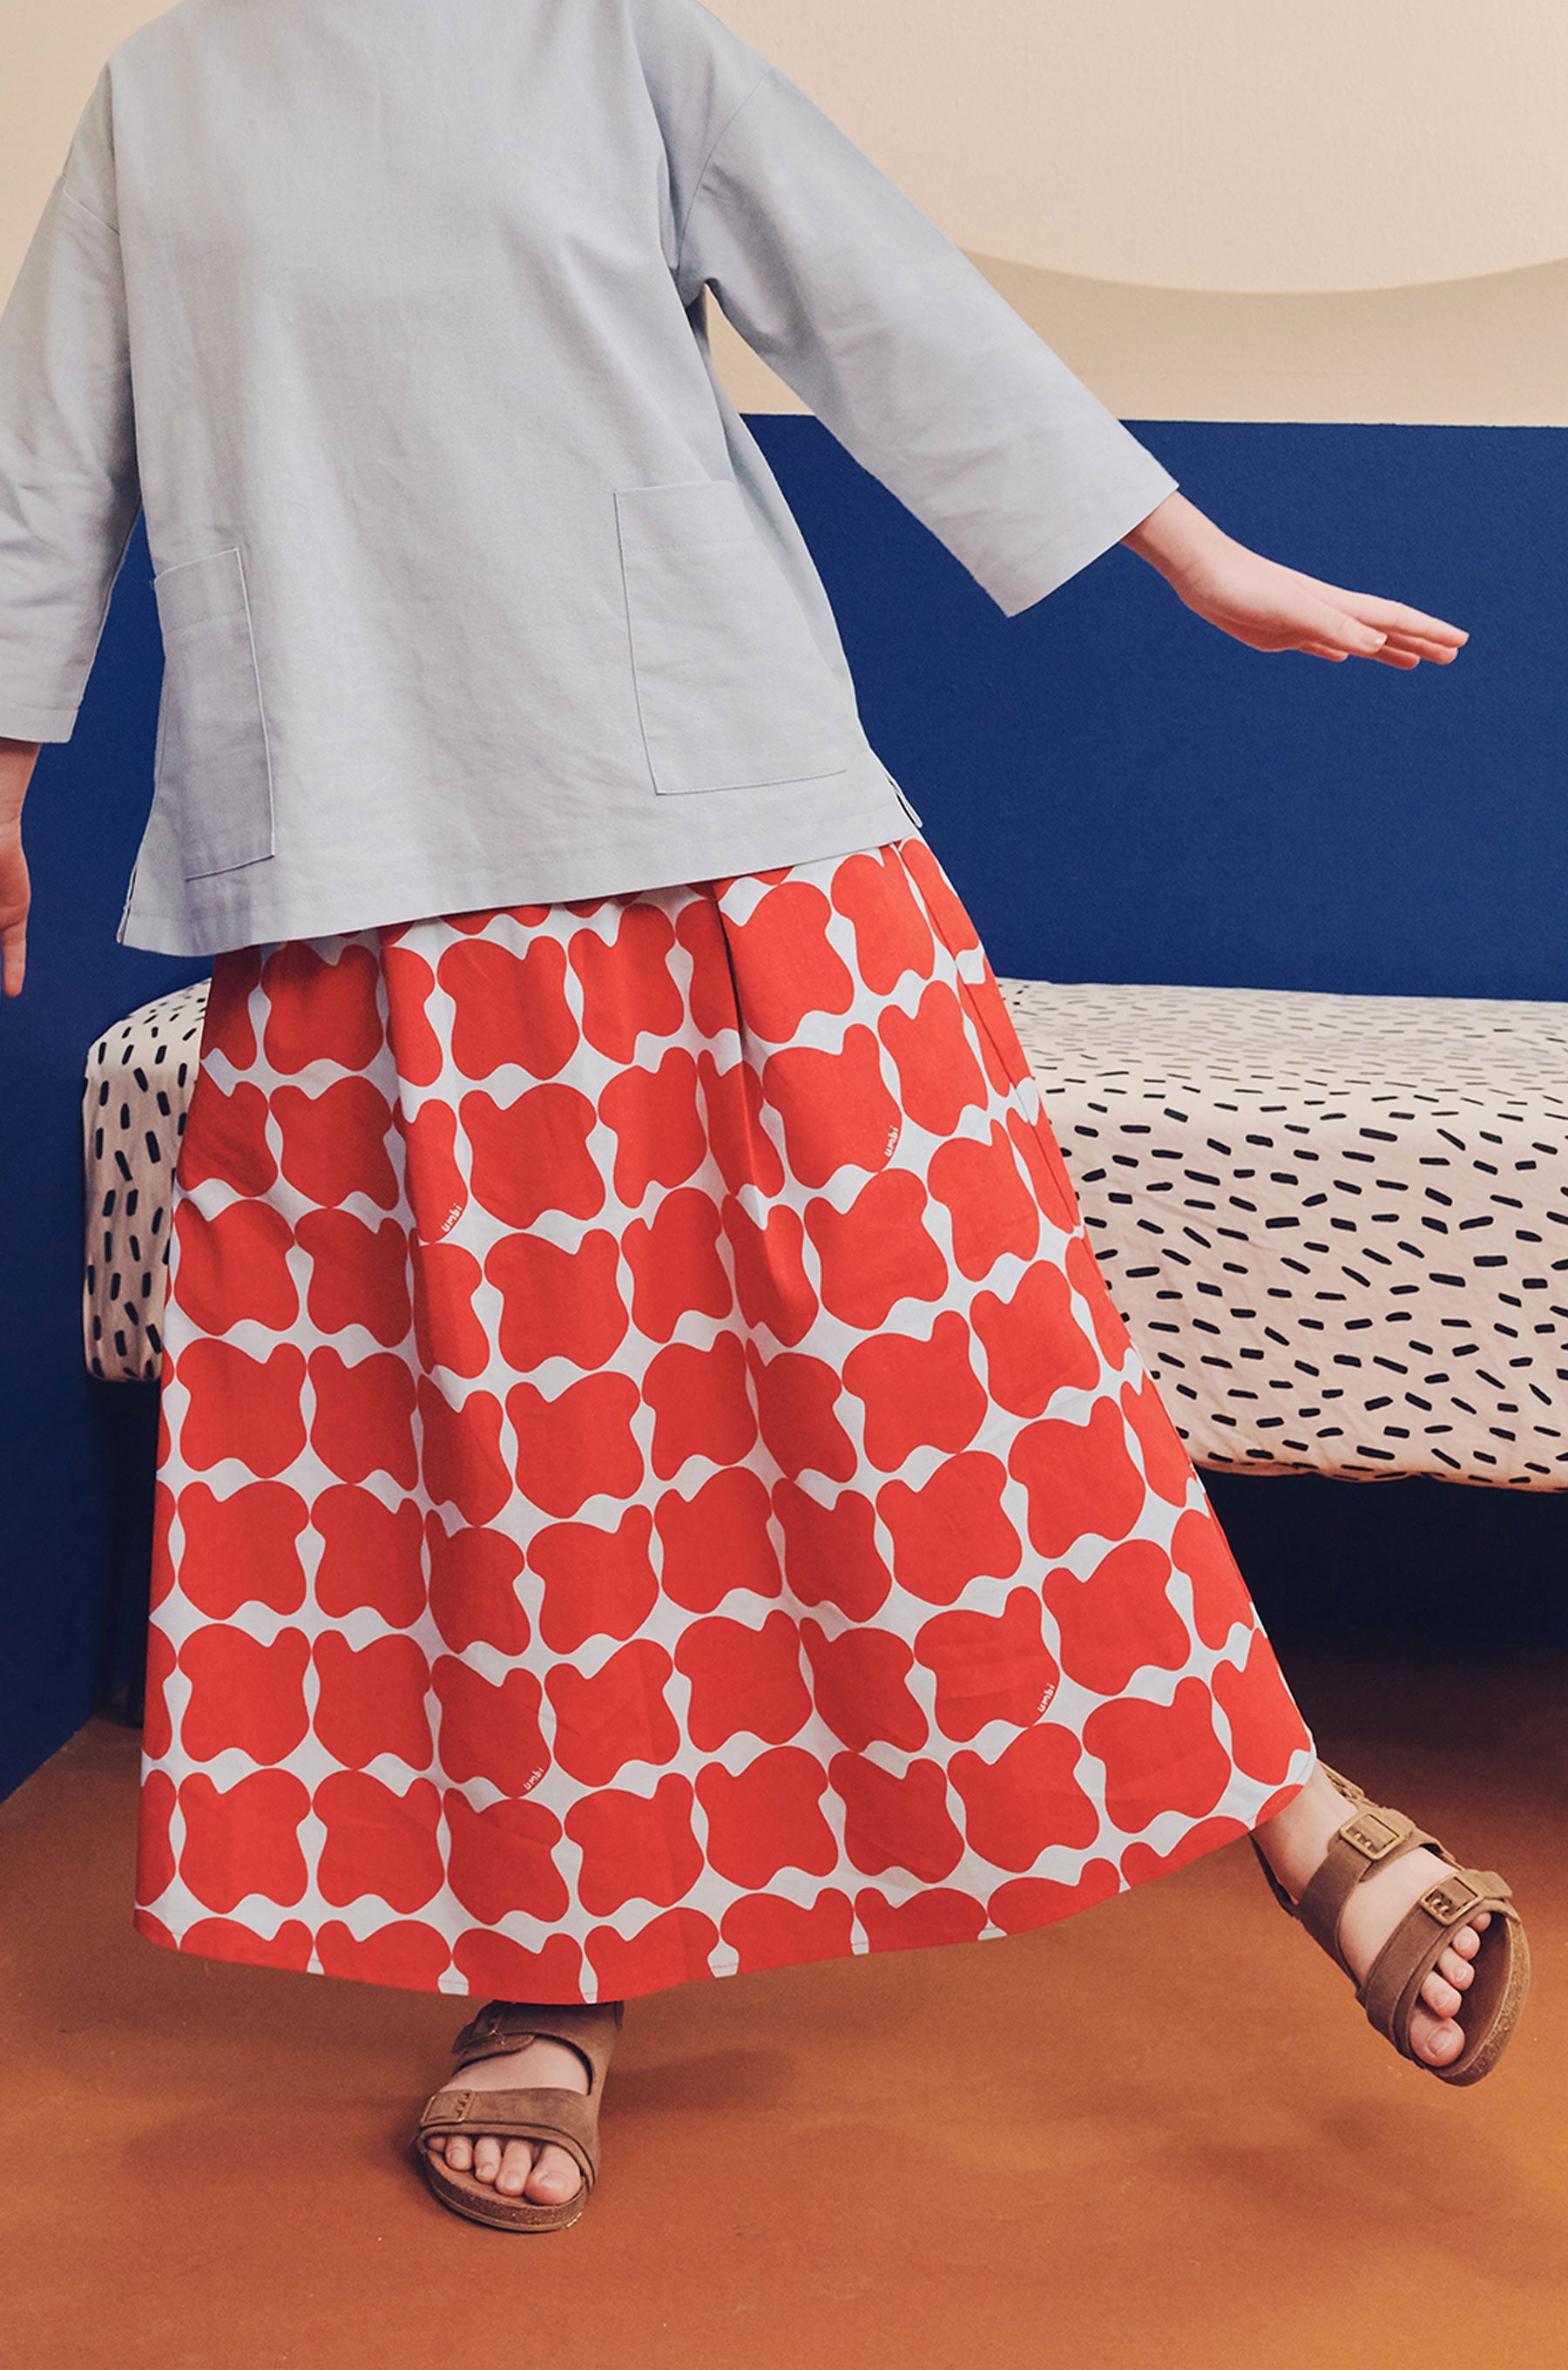 baju raya family sedondon kids girl teacup skirt bubblegum print 